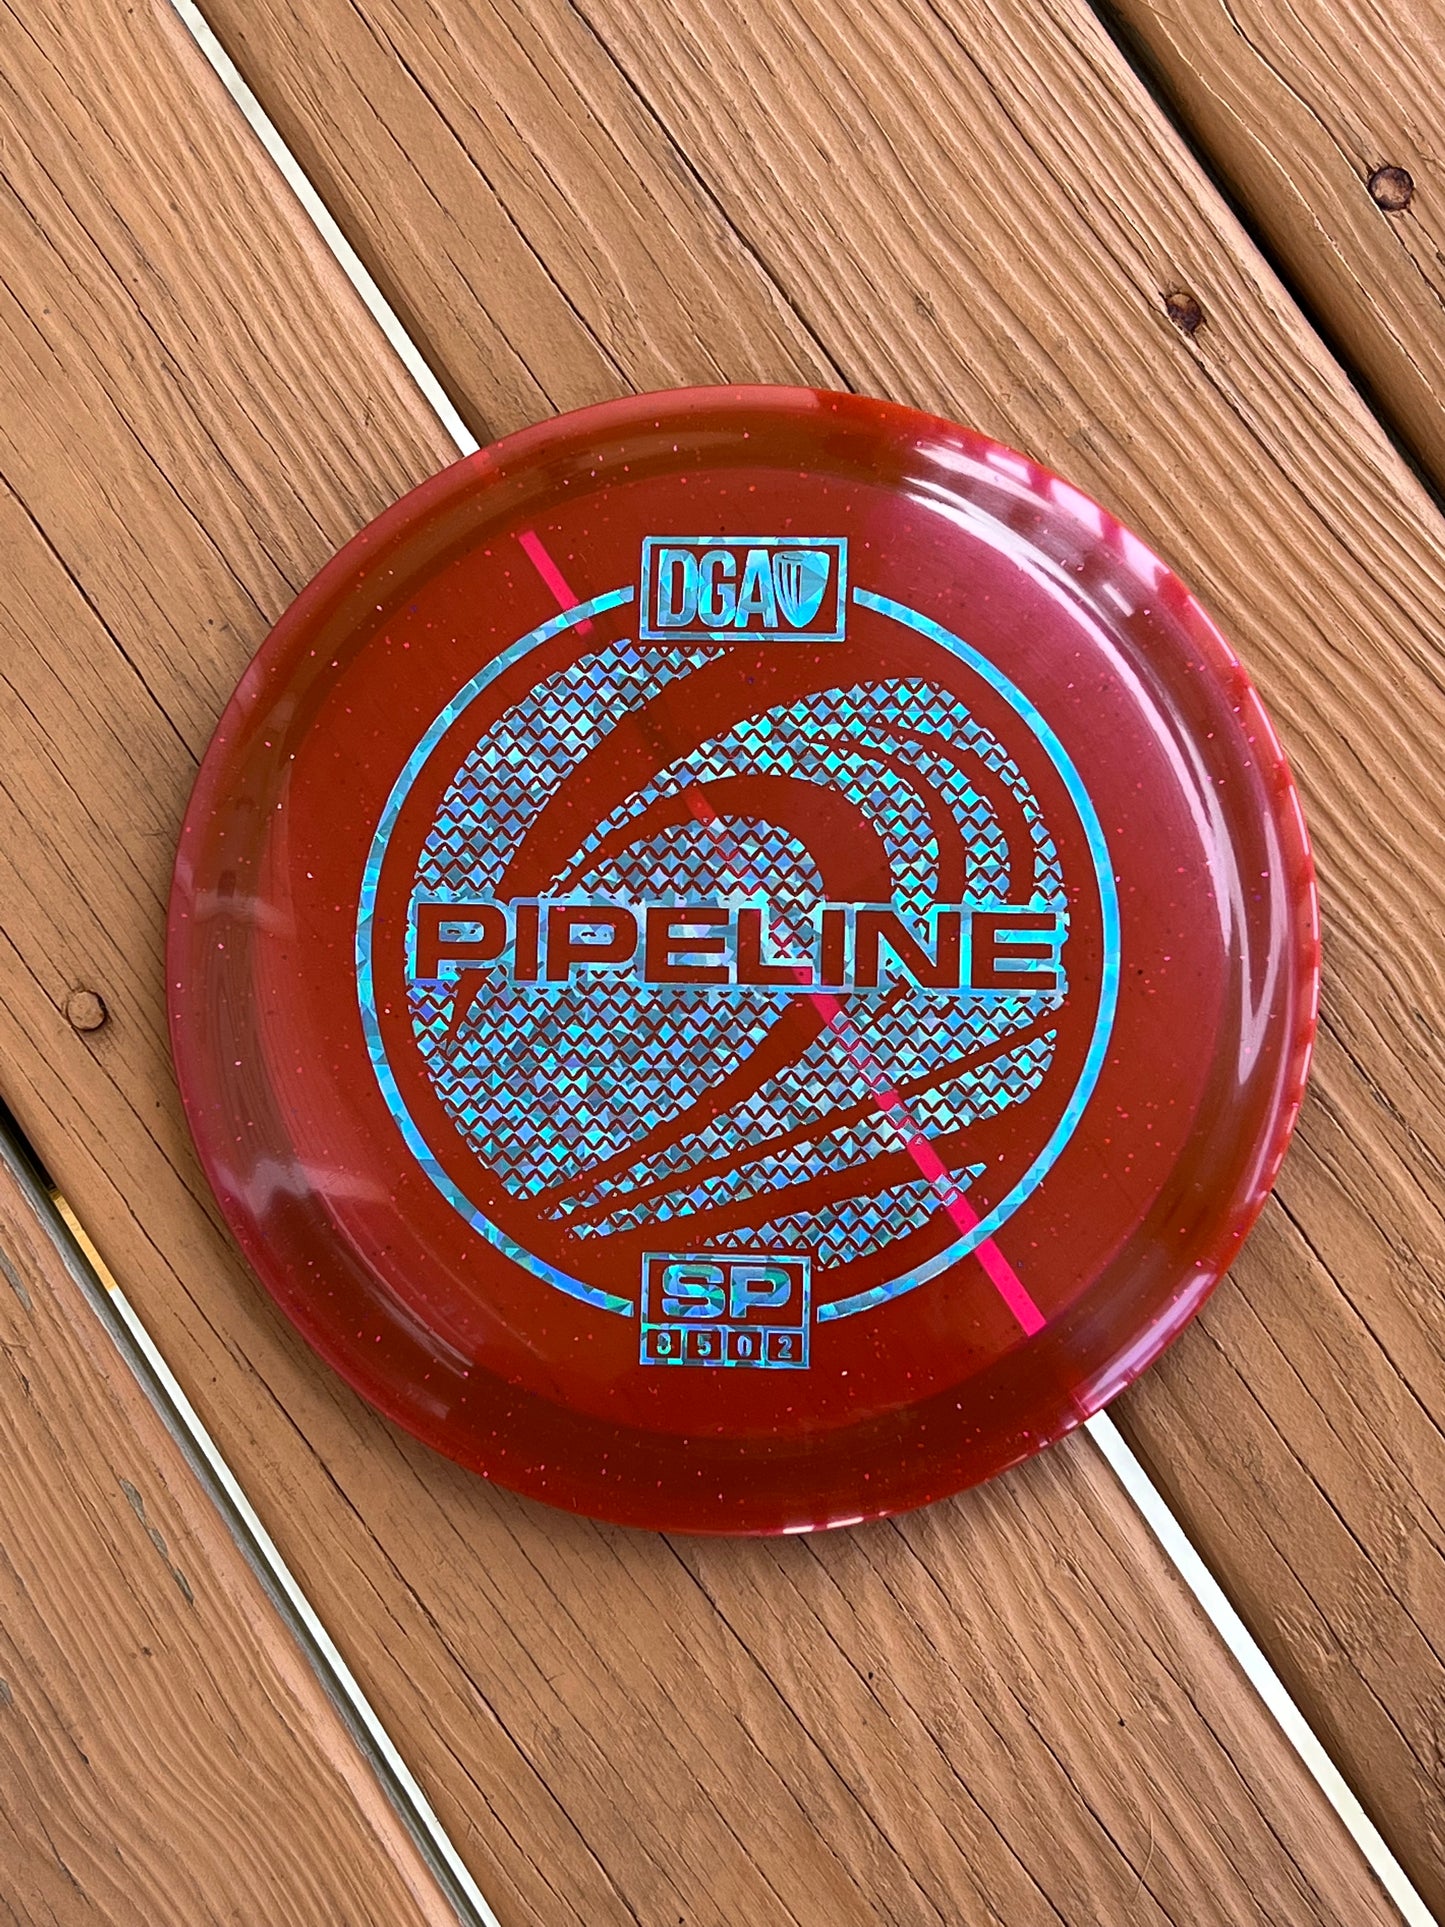 SP Line Pipeline